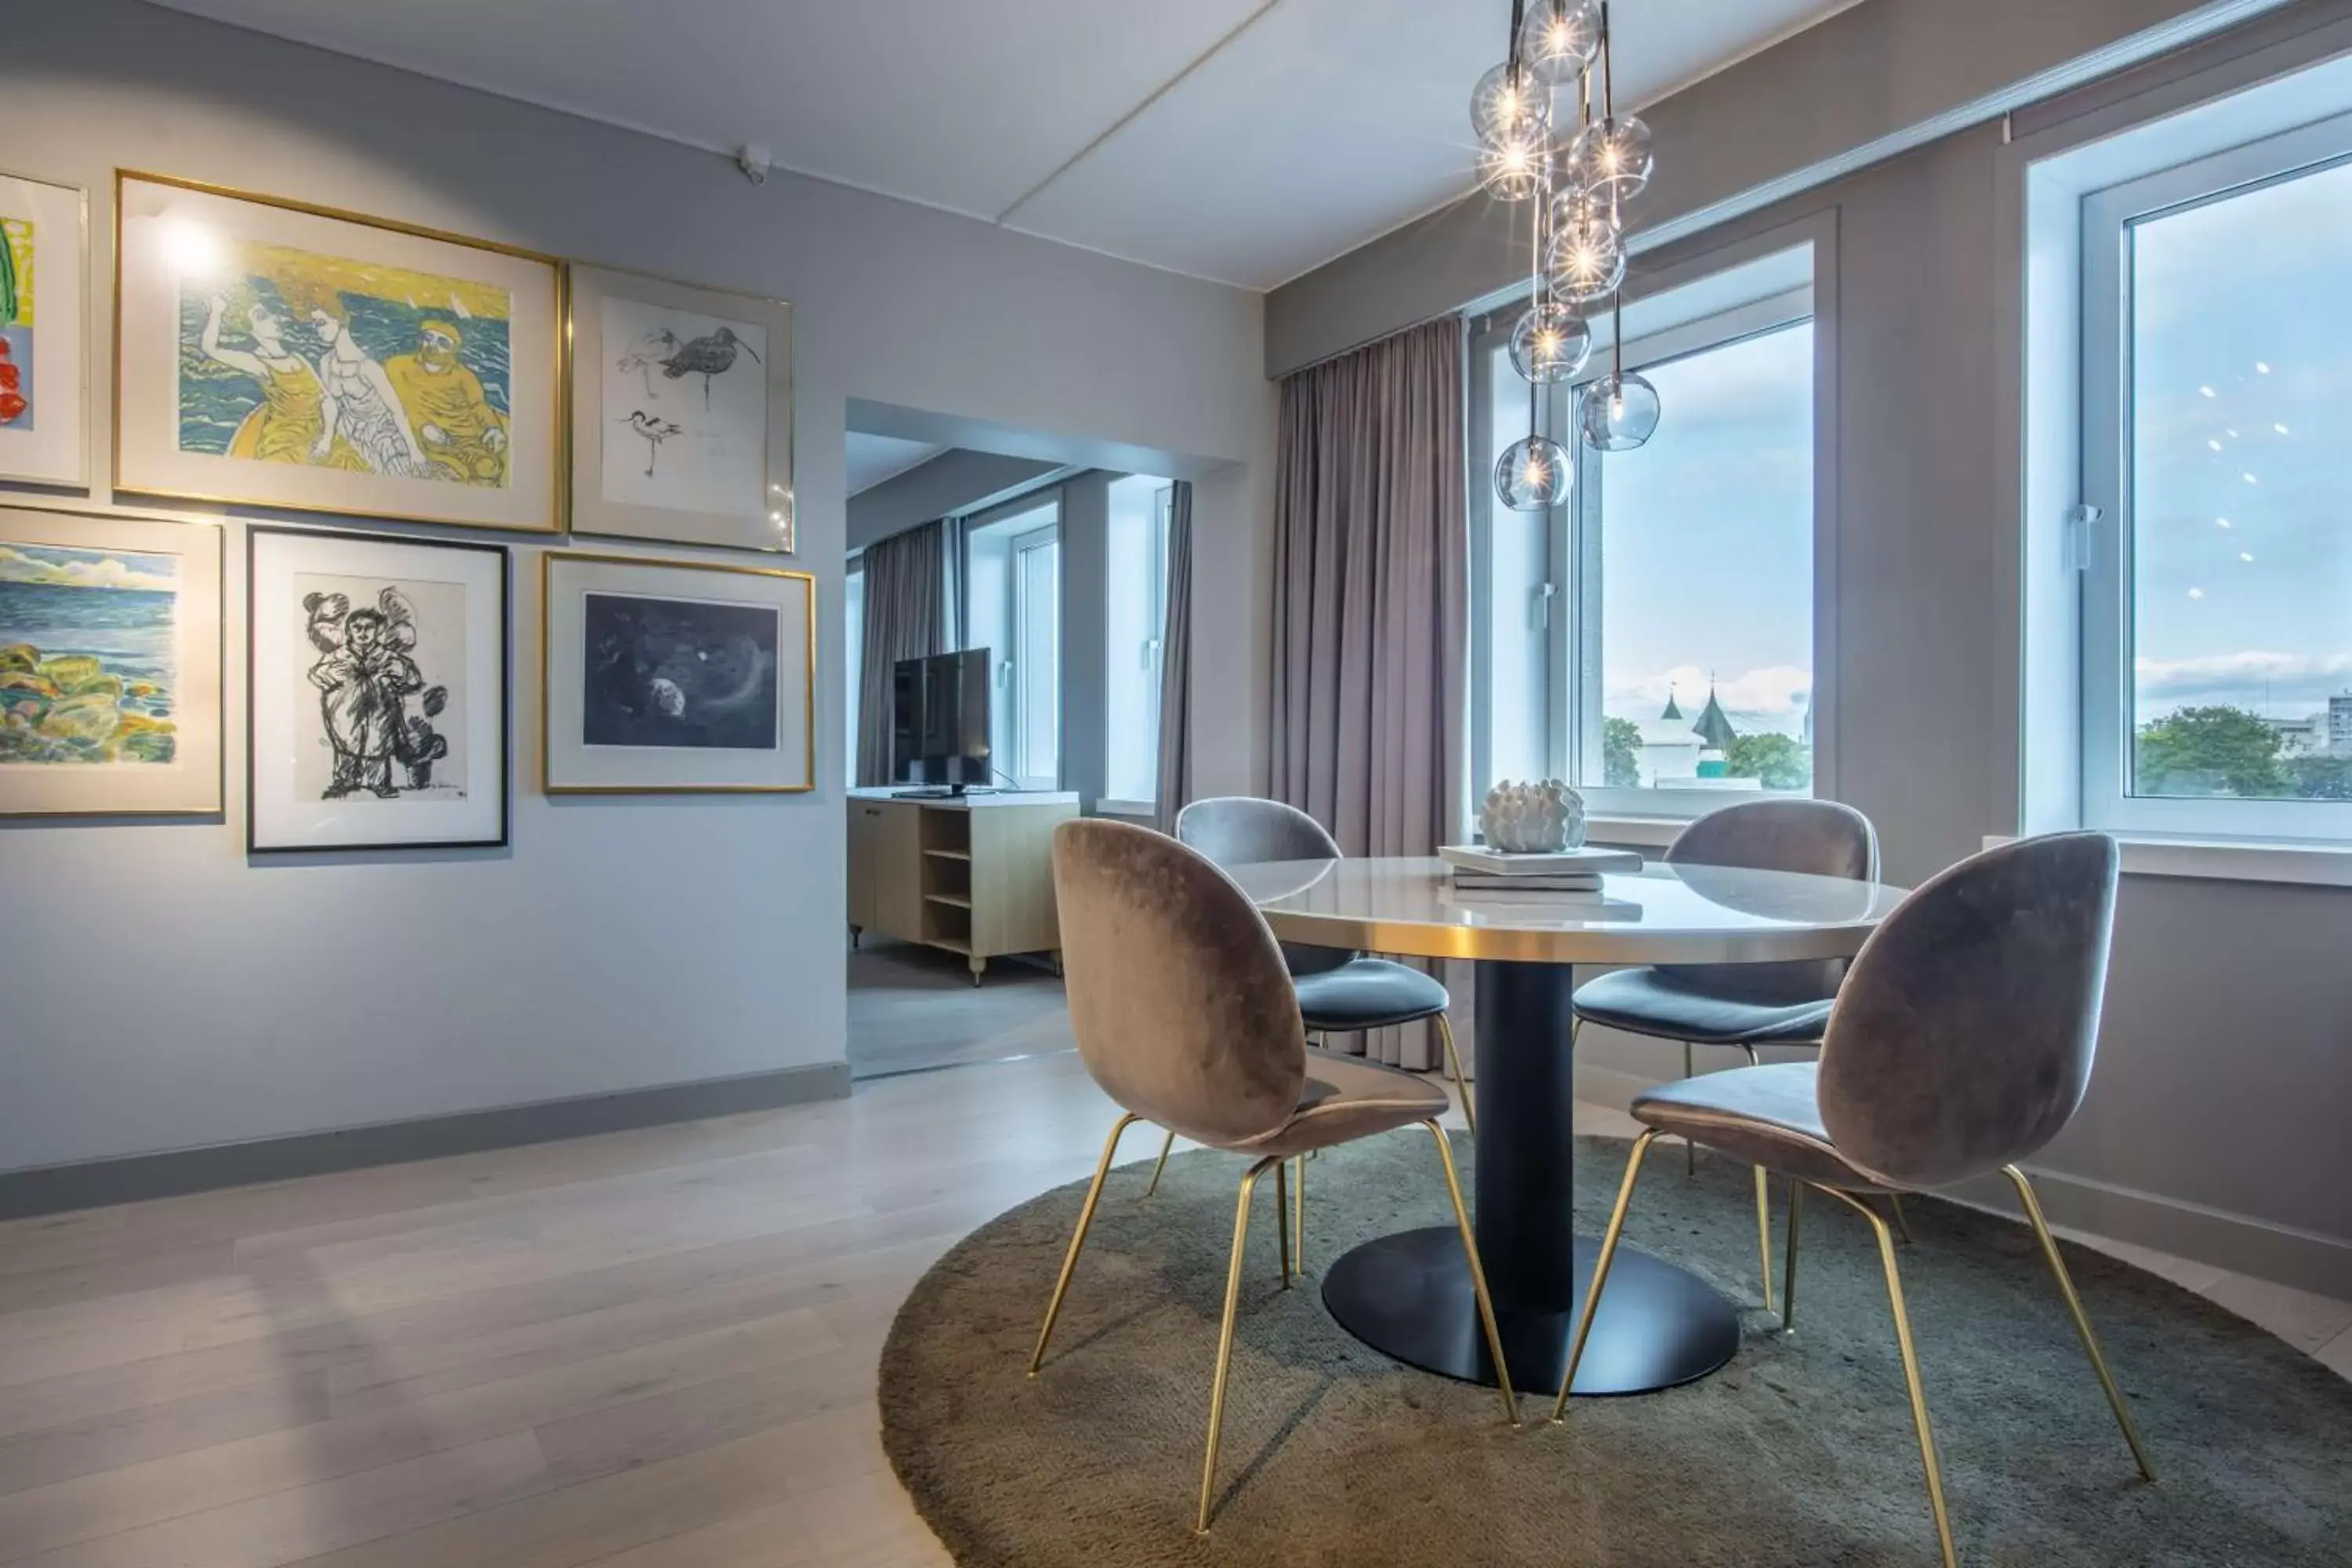 Photo of the whole room, Dining Area in Radisson Blu Atlantic Hotel, Stavanger